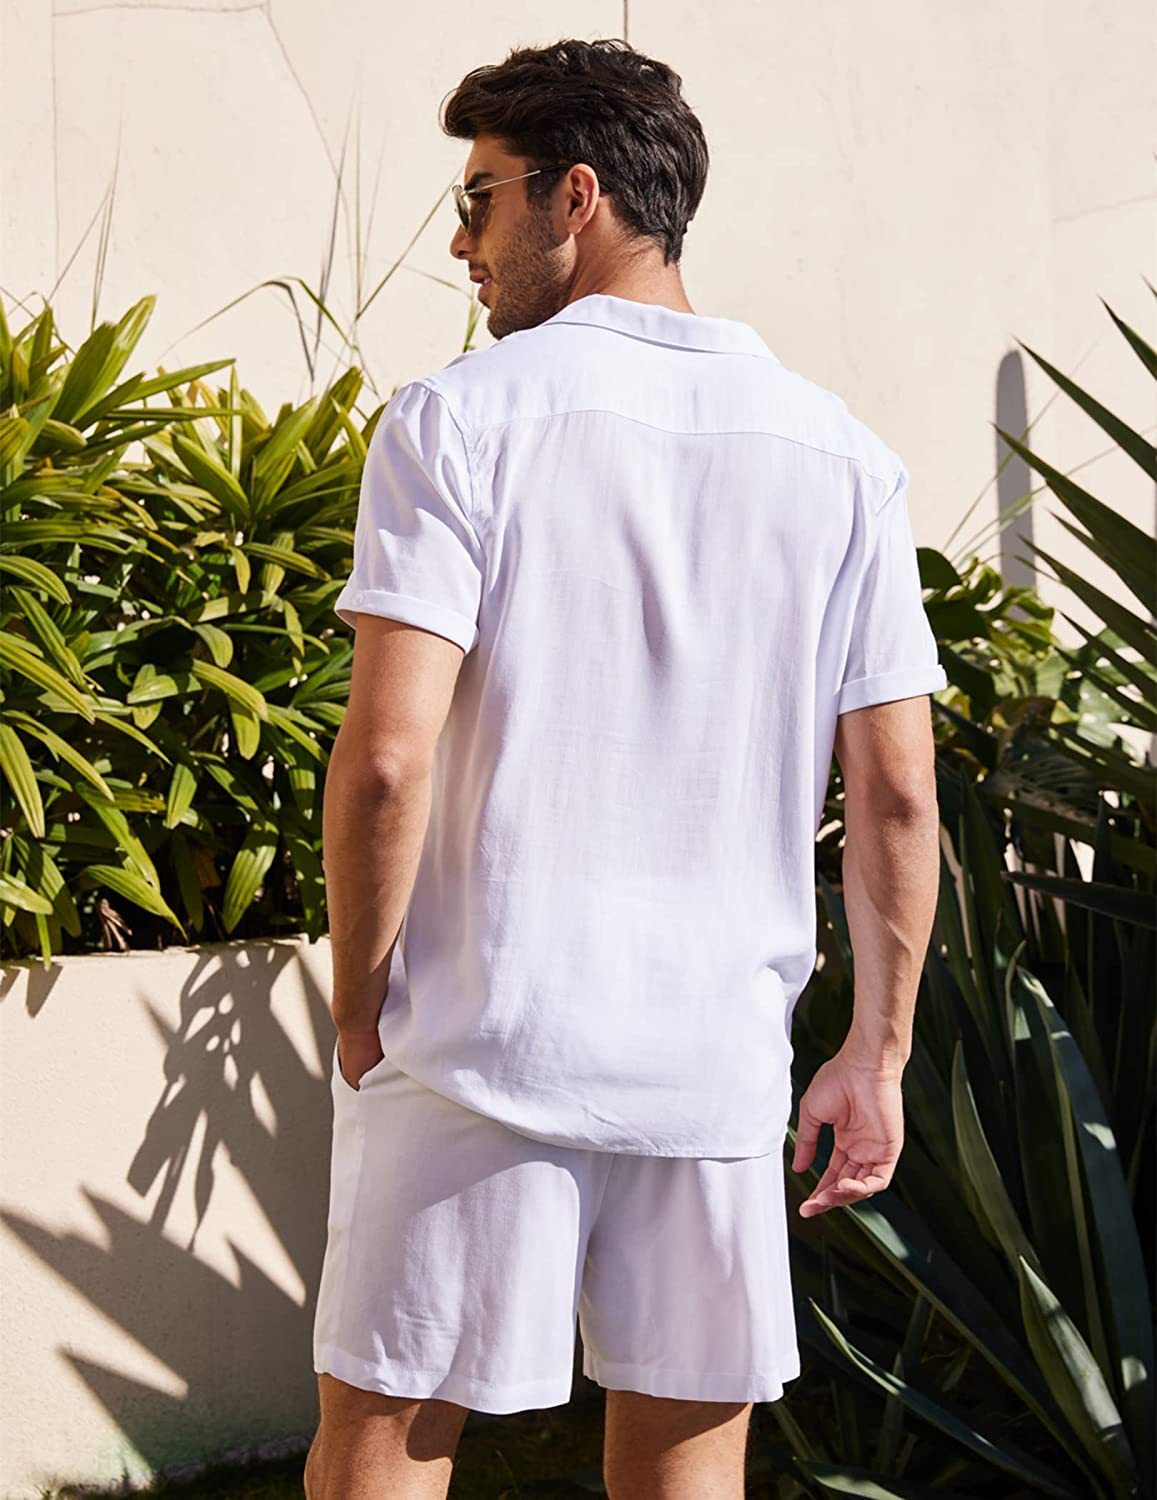 Casual Summer Men's Short Sleeves T Shirts and Shorts-Suits-Free Shipping at meselling99